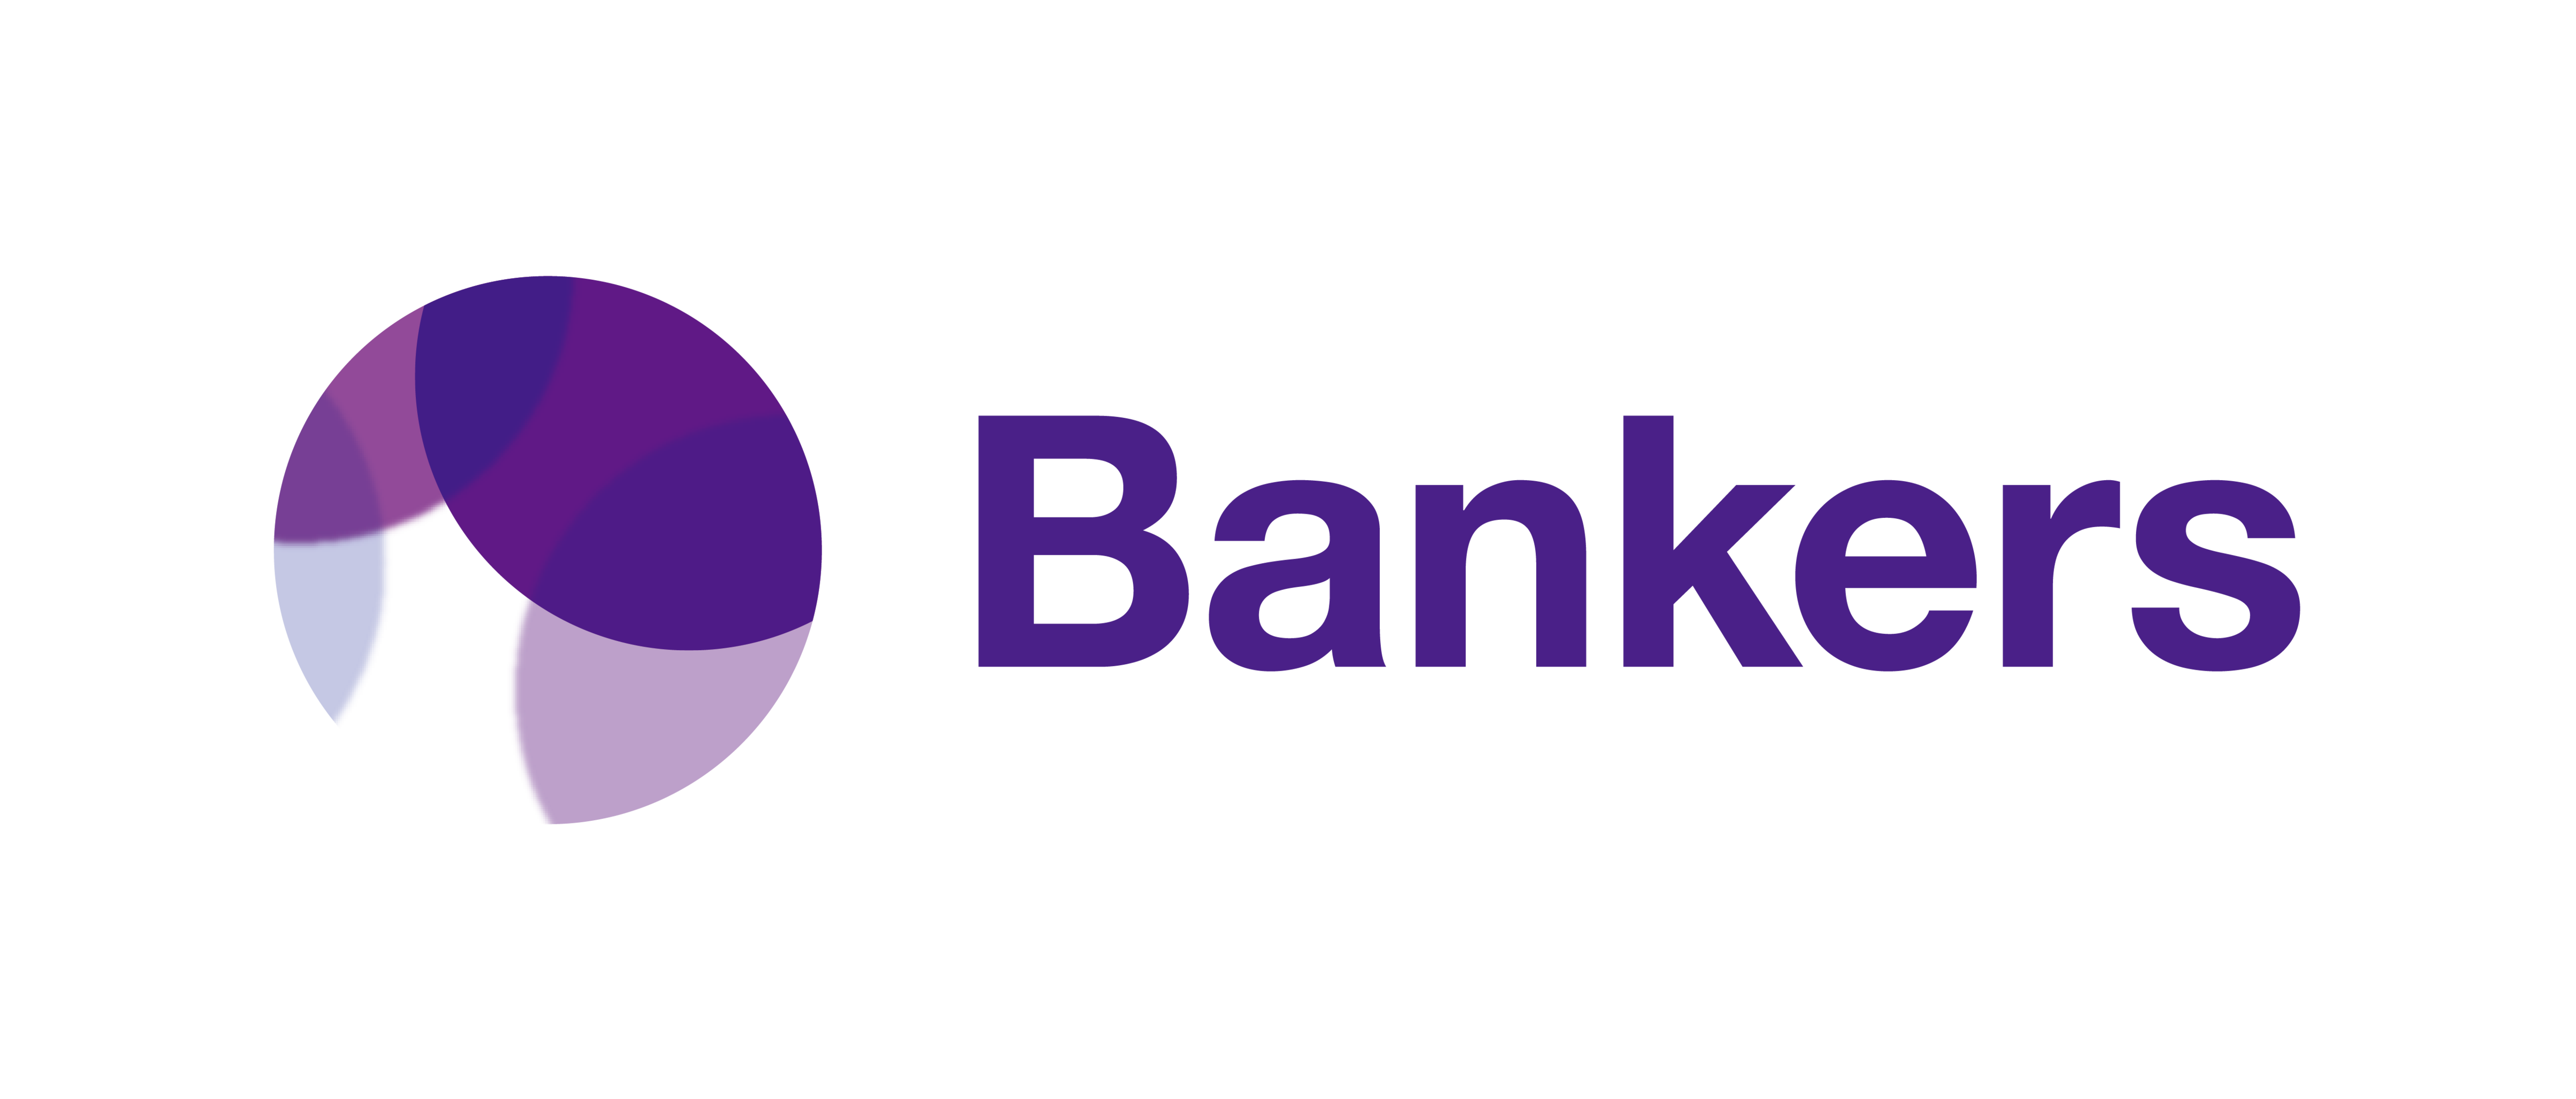 Bankkers_logo